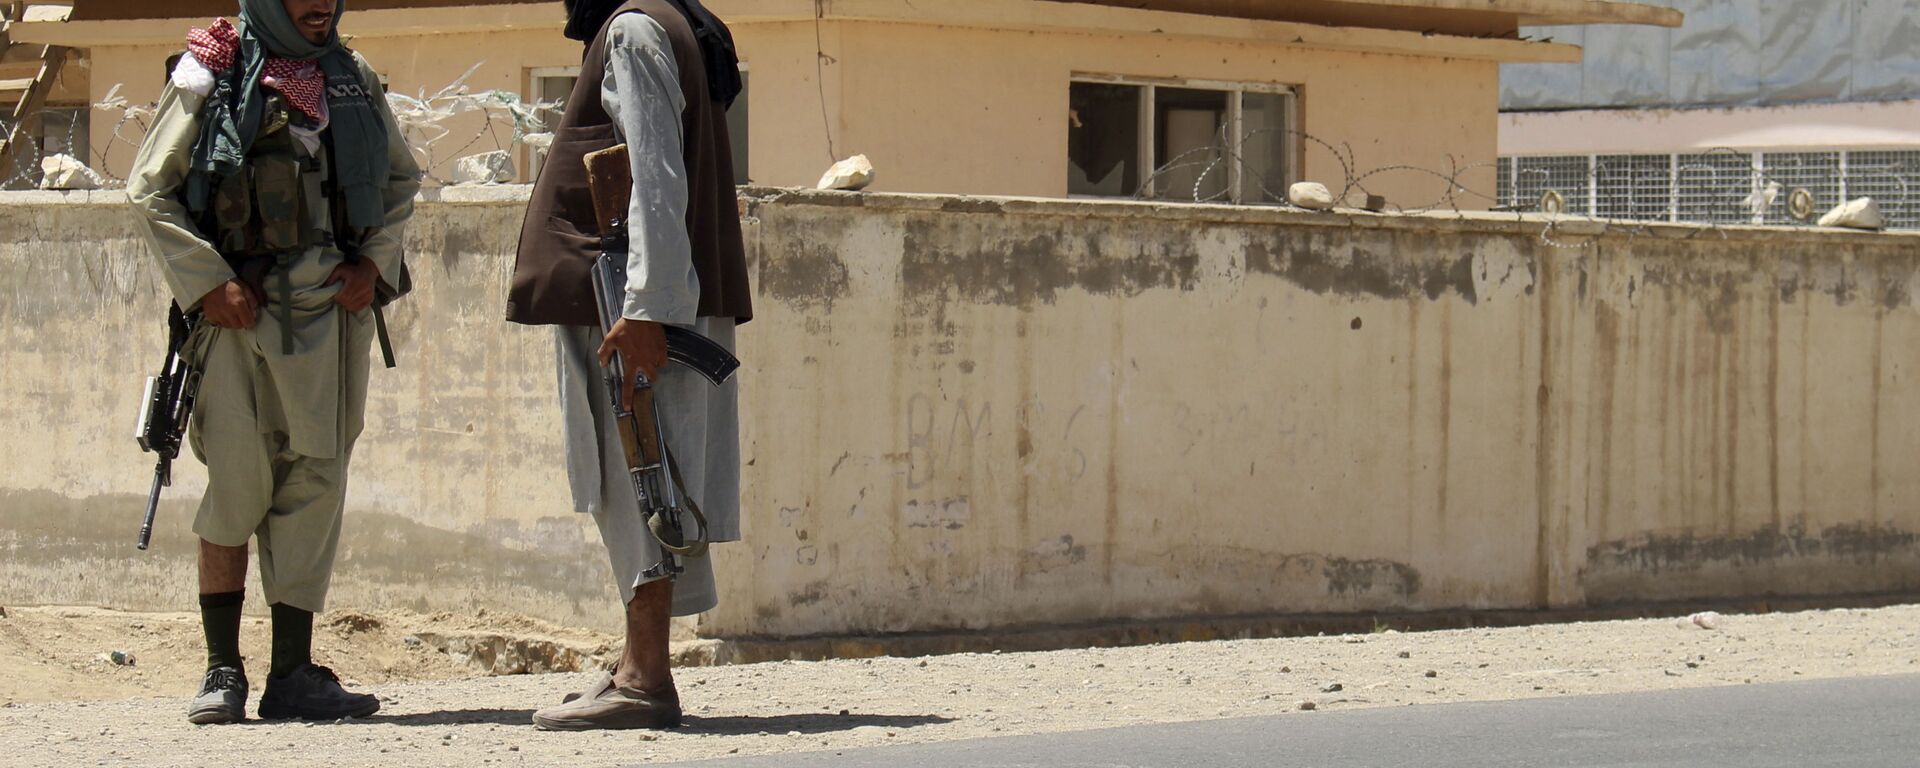 Боевики Талибана* в городе Газни, Афганистан - Sputnik Узбекистан, 1920, 31.08.2021